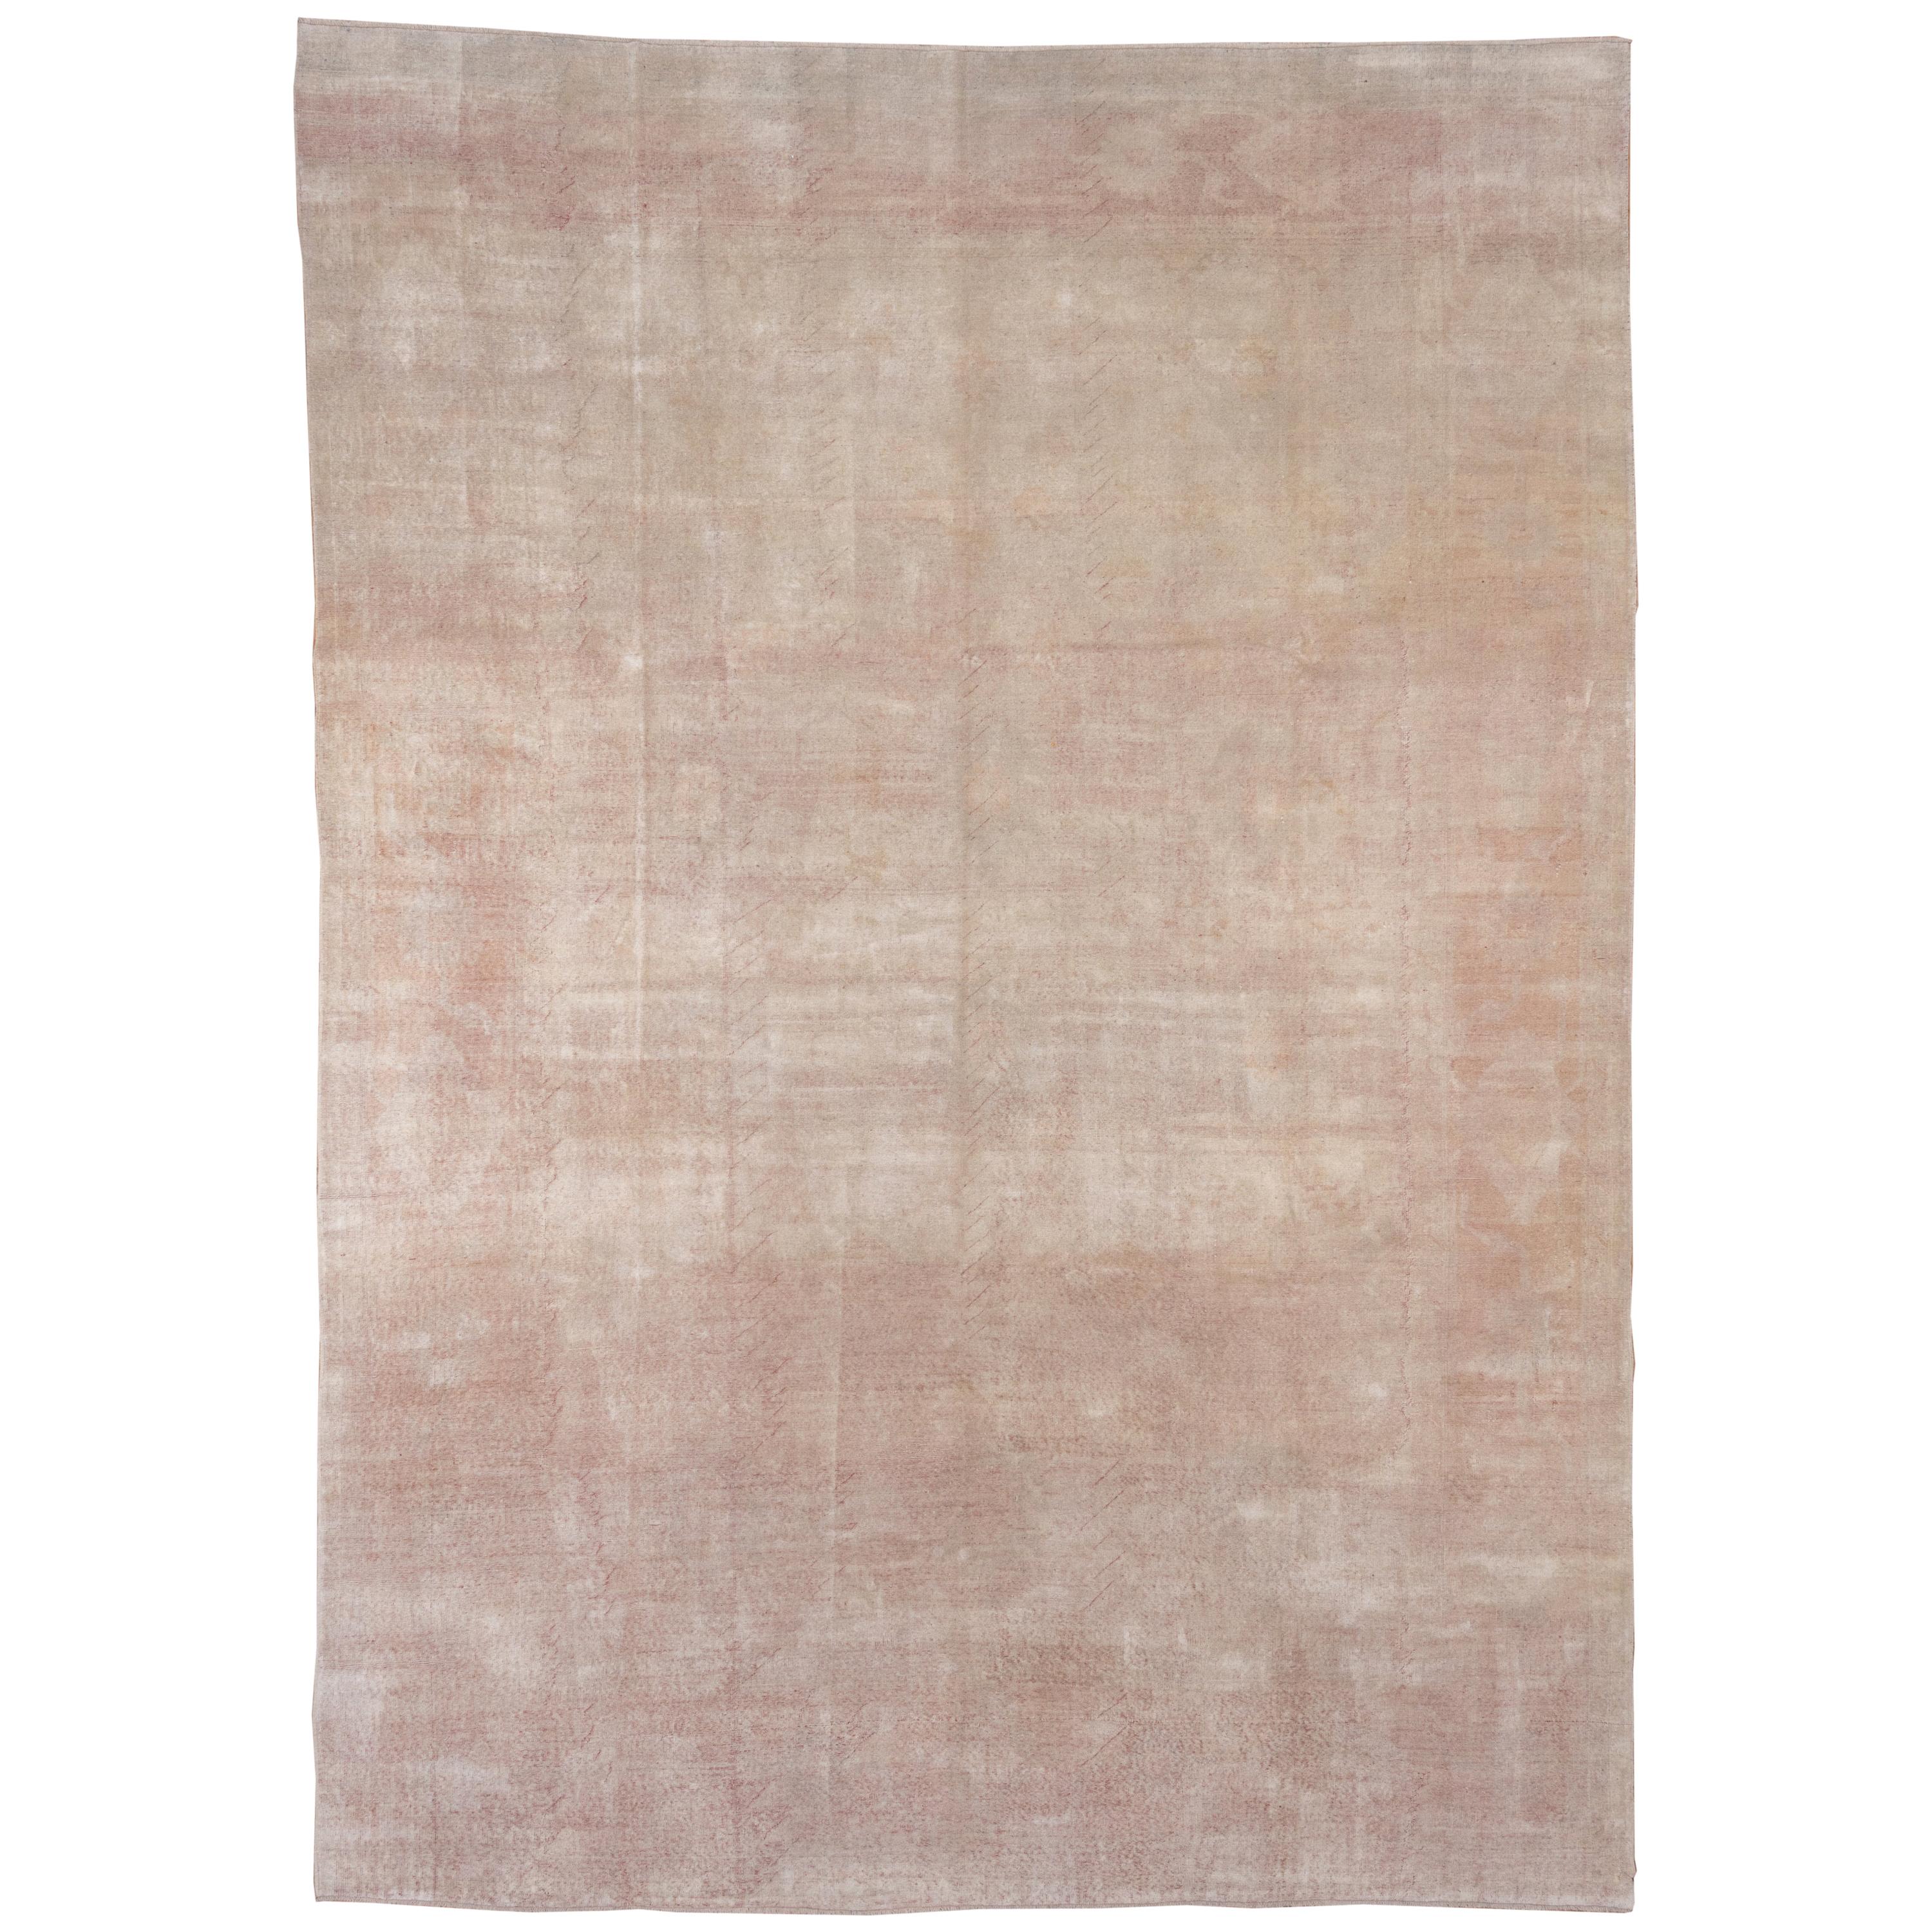 Vintage Oushak Carpet, Light Pink Accents, Solid Field